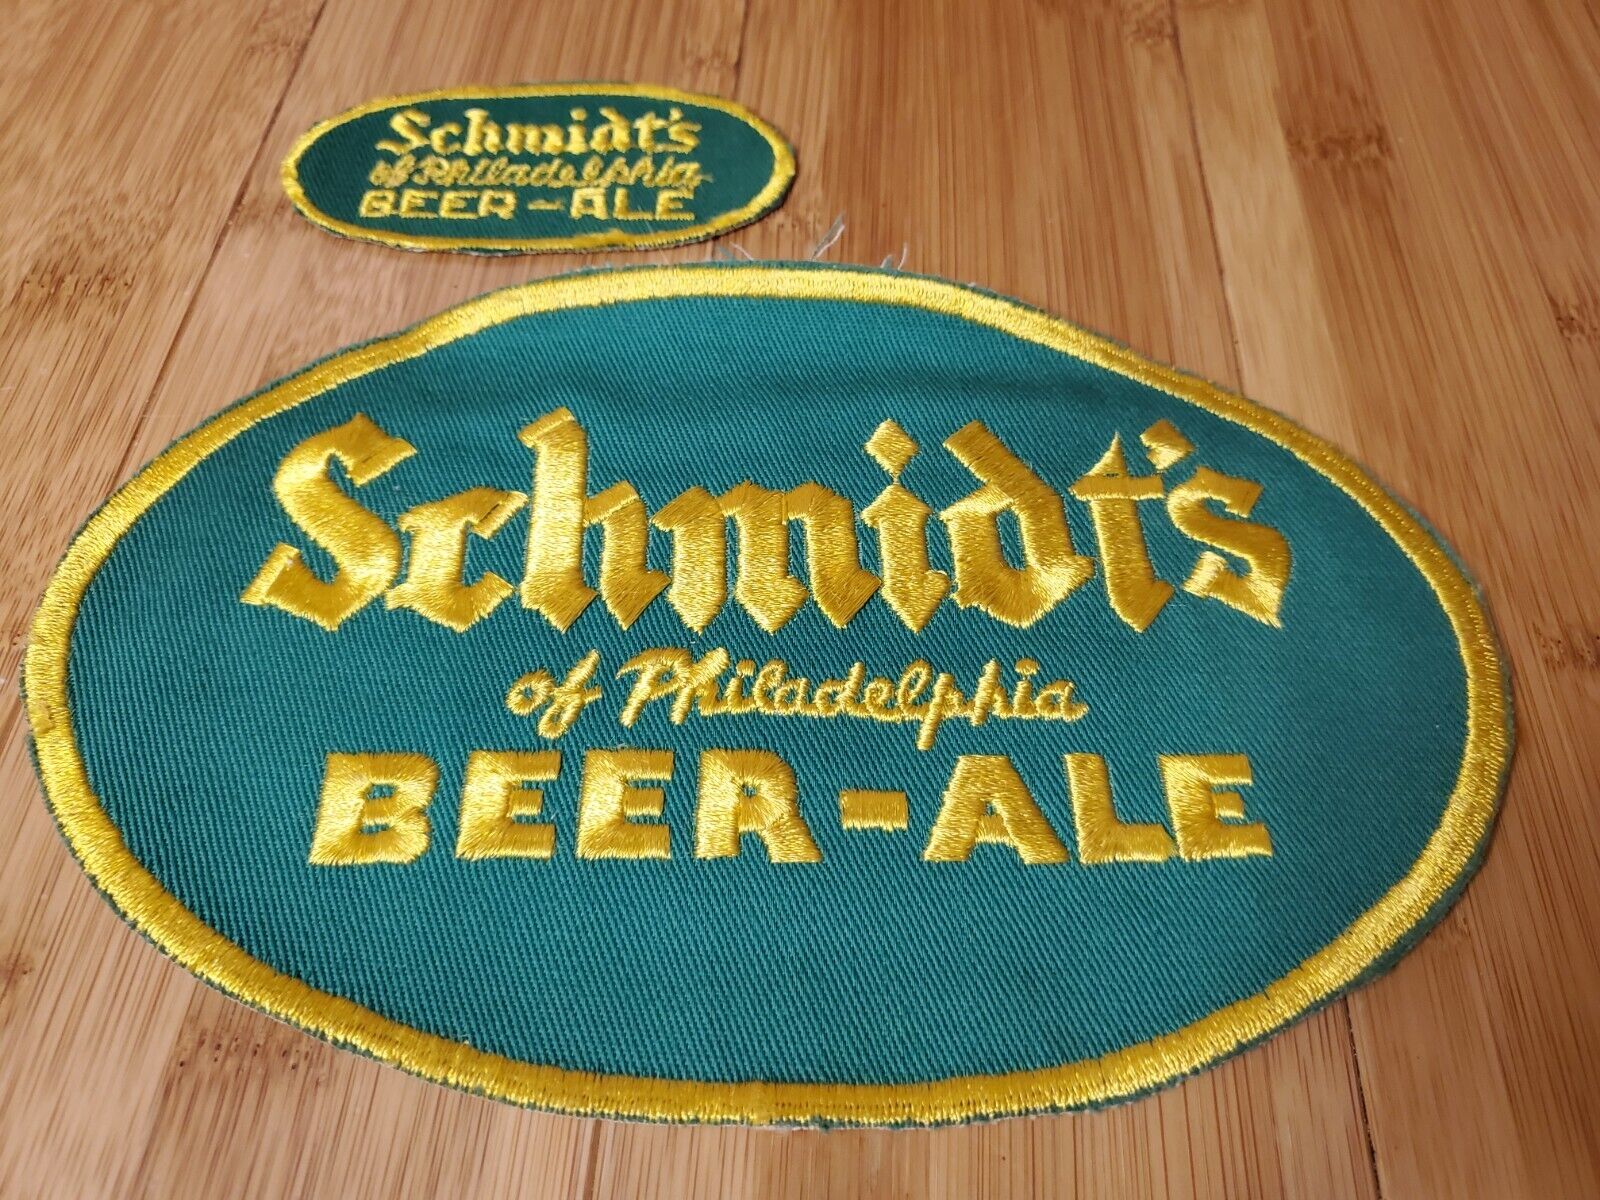 🍺🟩 Vintage Schmidt's Beer Patch Lot. Large for Rear, Small for front. Uniform 